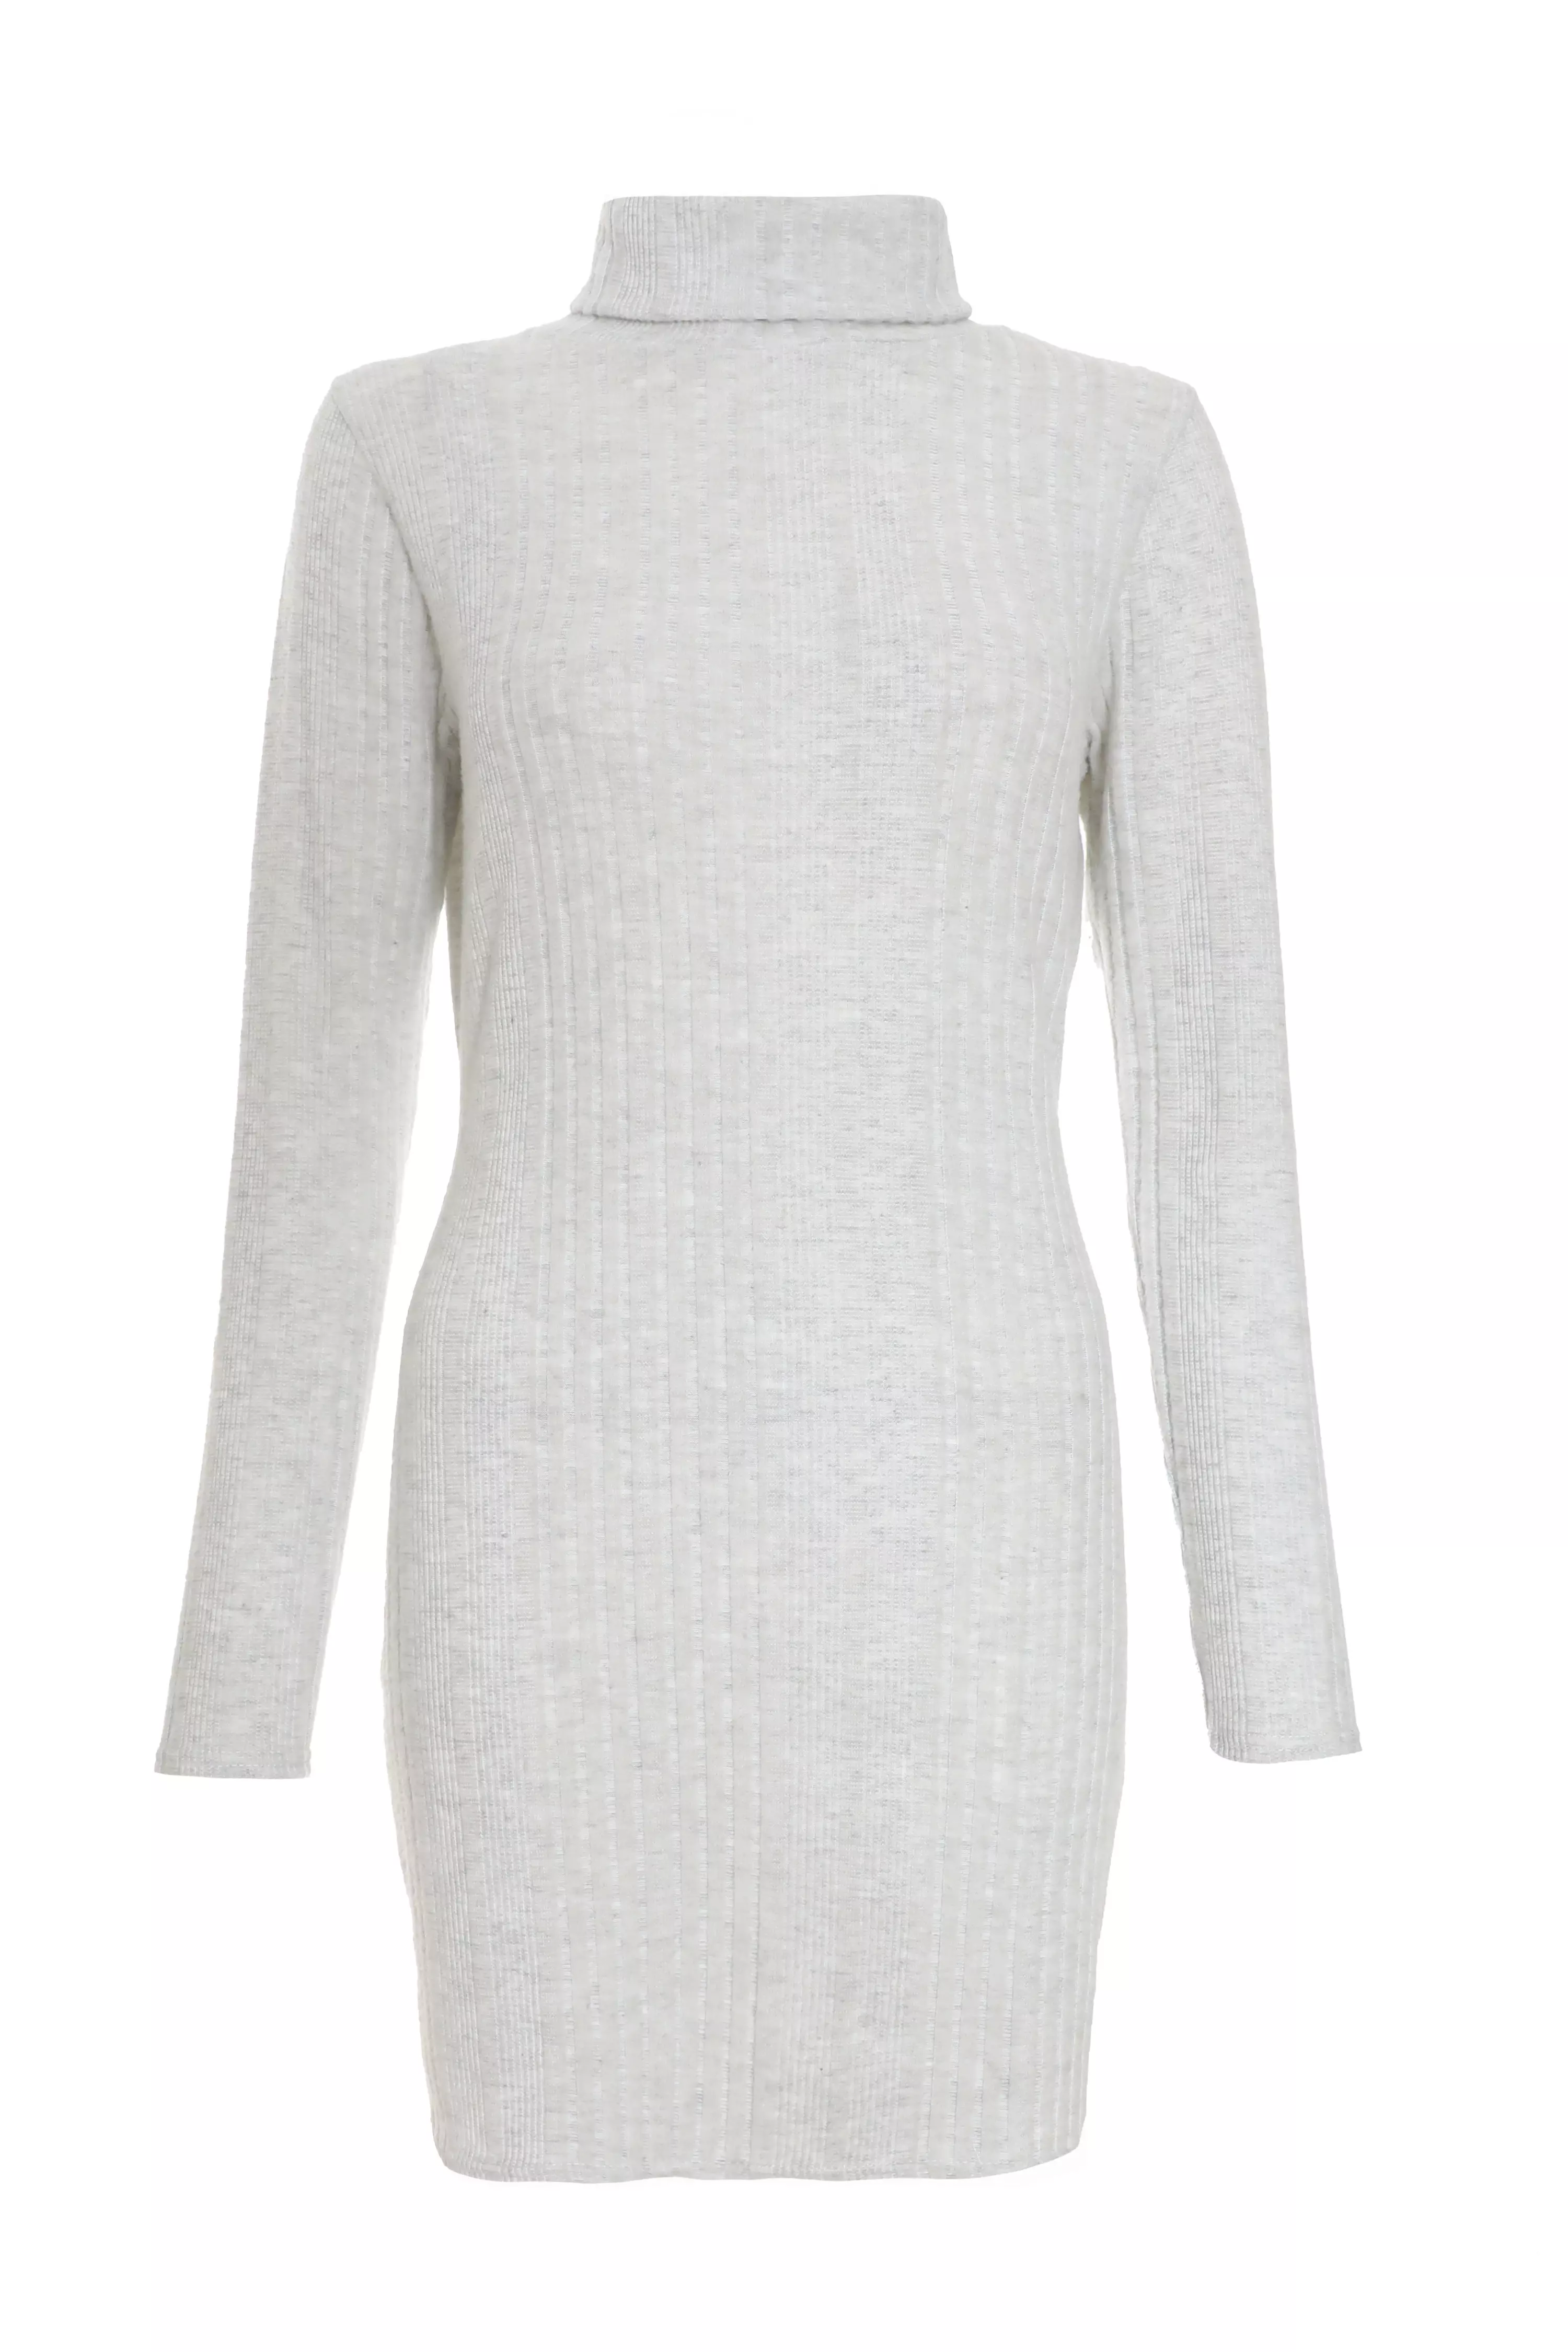 Grey Marl Knitted High Neck Mini Dress - QUIZ Clothing